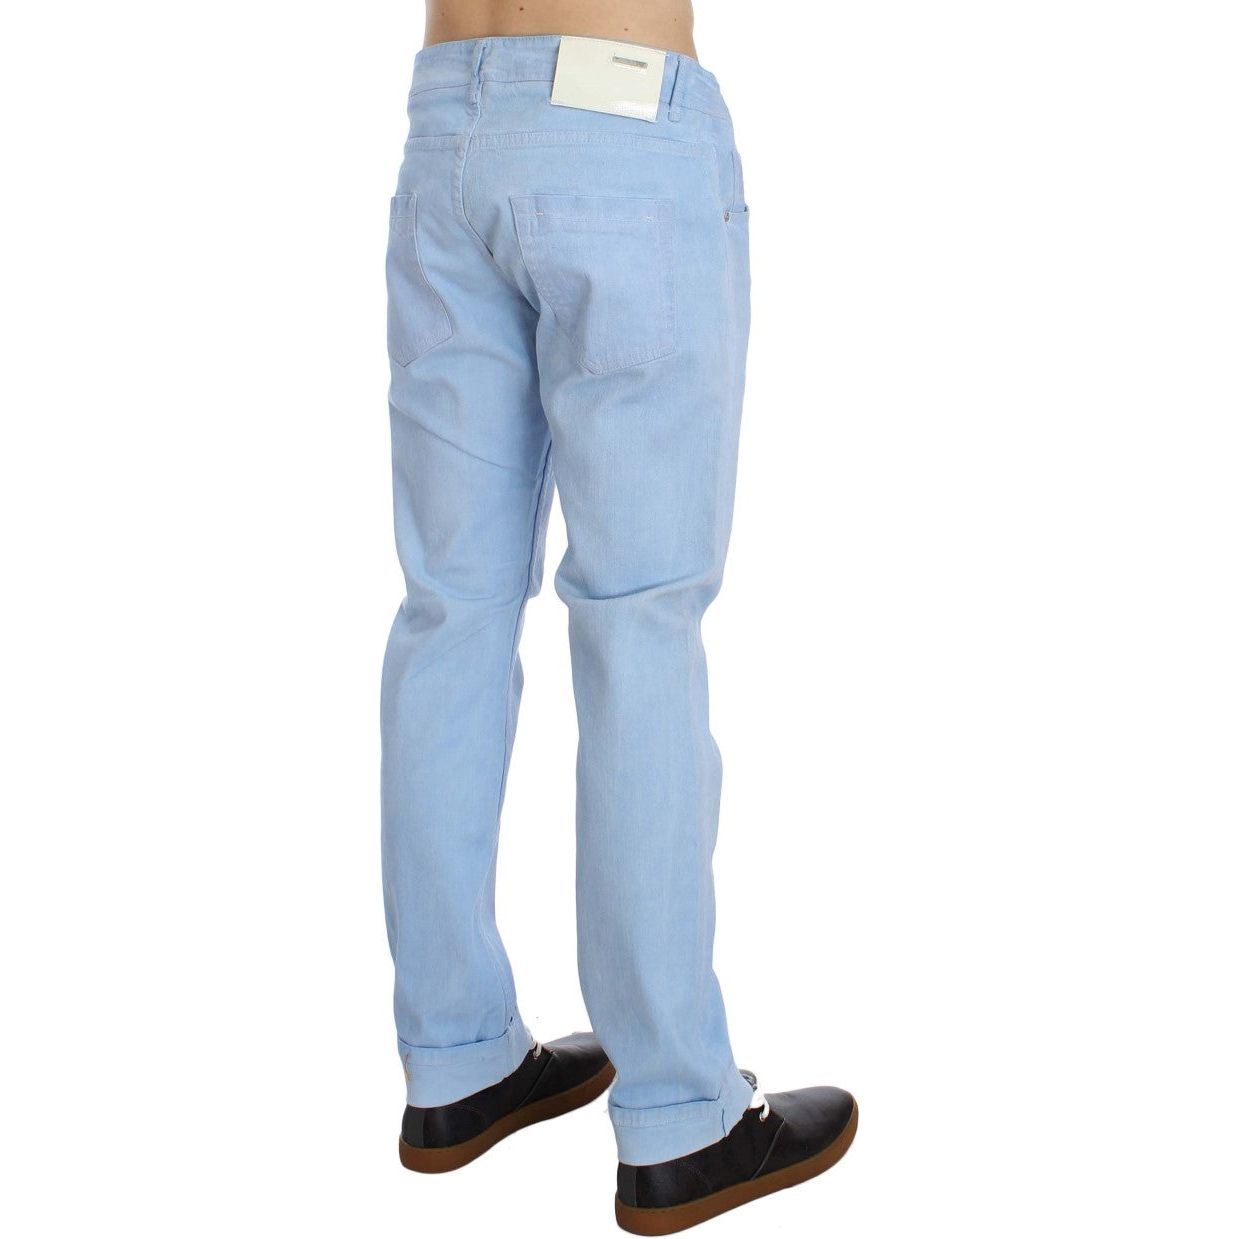 Acht Elegant Low Waist Regular Fit Men's Jeans blue-cotton-stretch-low-waist-fit-jeans 299172-blue-cotton-stretch-low-waist-fit-jeans.jpg